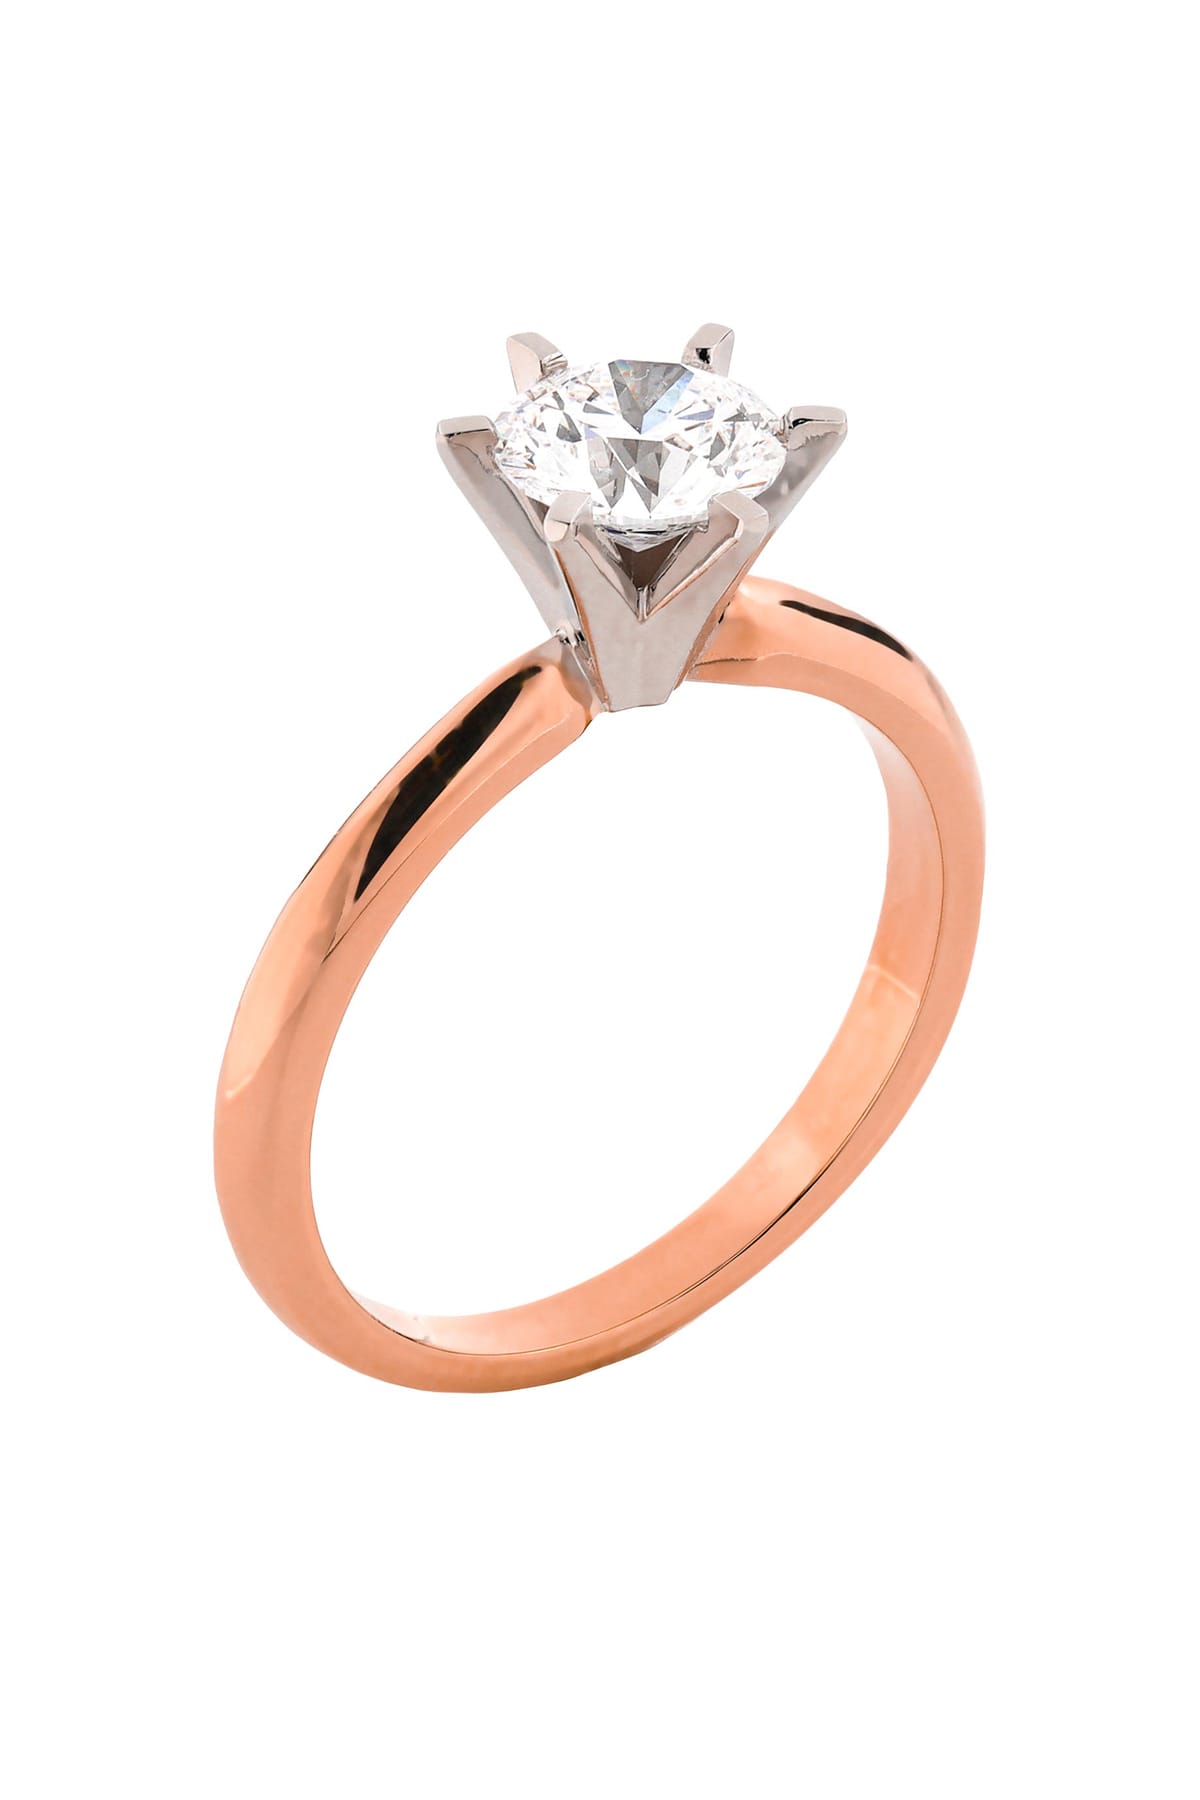 LeGassick 1.00ct Diamond Solitaire Engagement Ring at LeGassick Jewellers Gold Coast, Australia